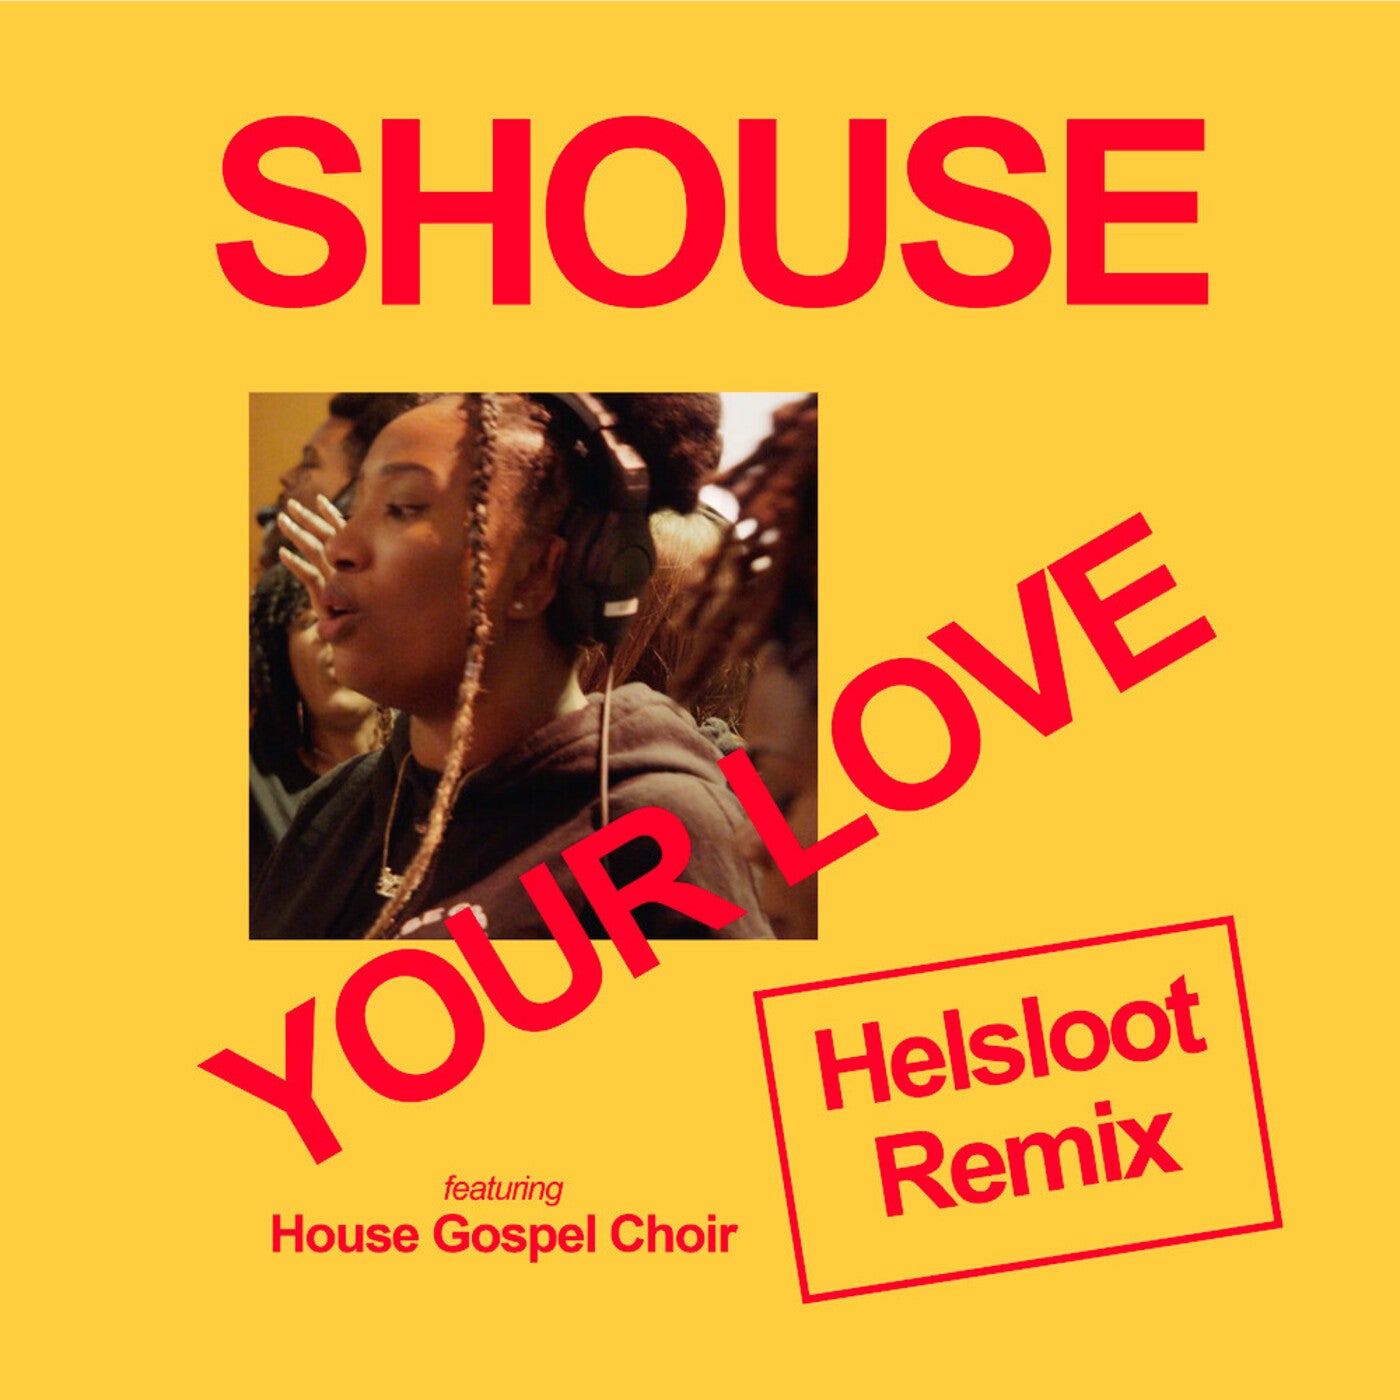 Shouse - Your Love Feat. House Gospel Choir (helsloot Extended Remix) on Revolution Radio